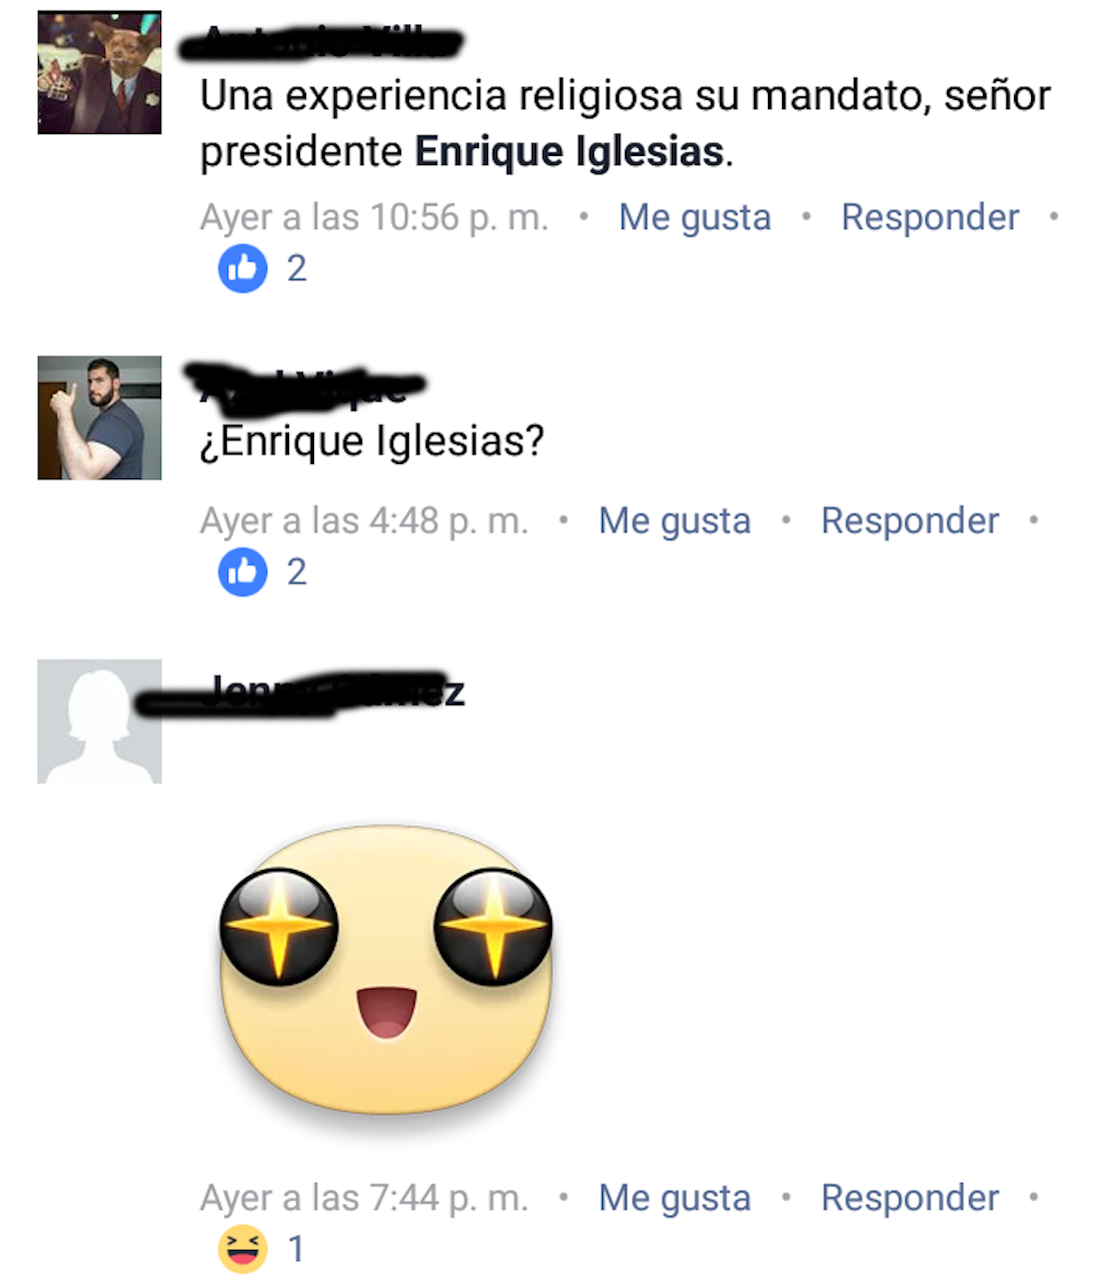 Confunden a Enrique Iglesias con Enrique Peña Nieto